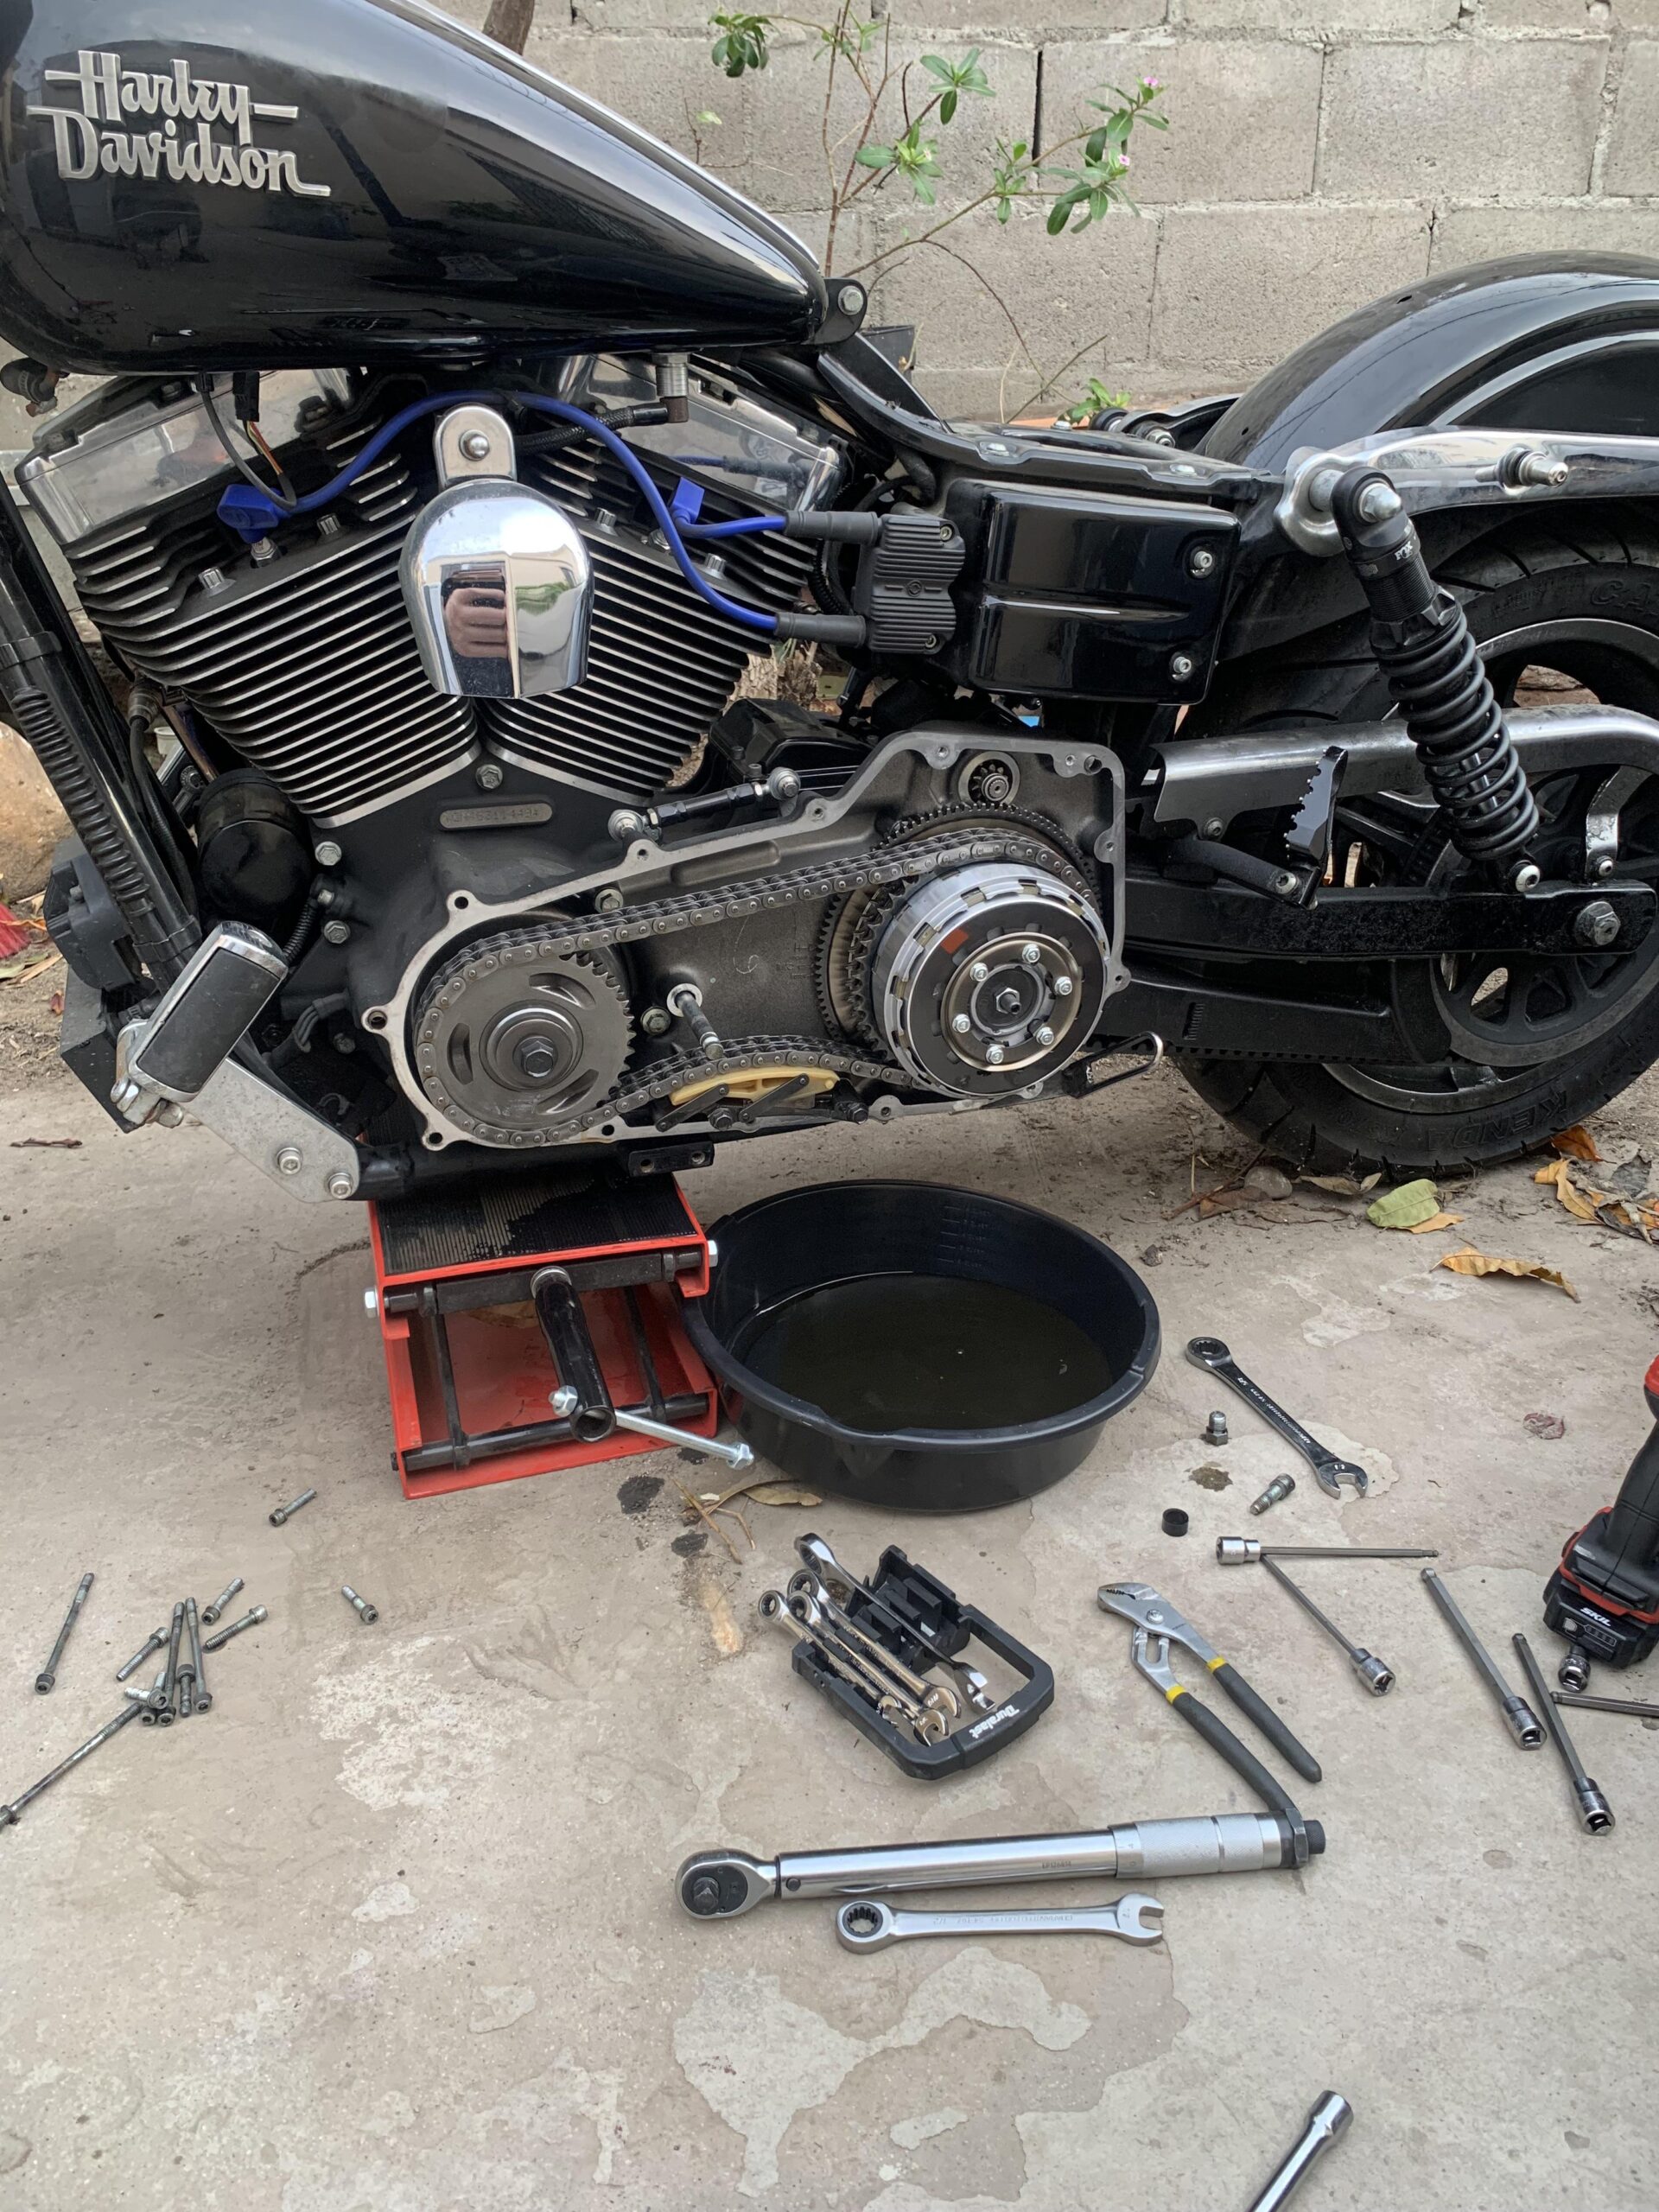 Harley Davidson Starter Problems Troubleshooting